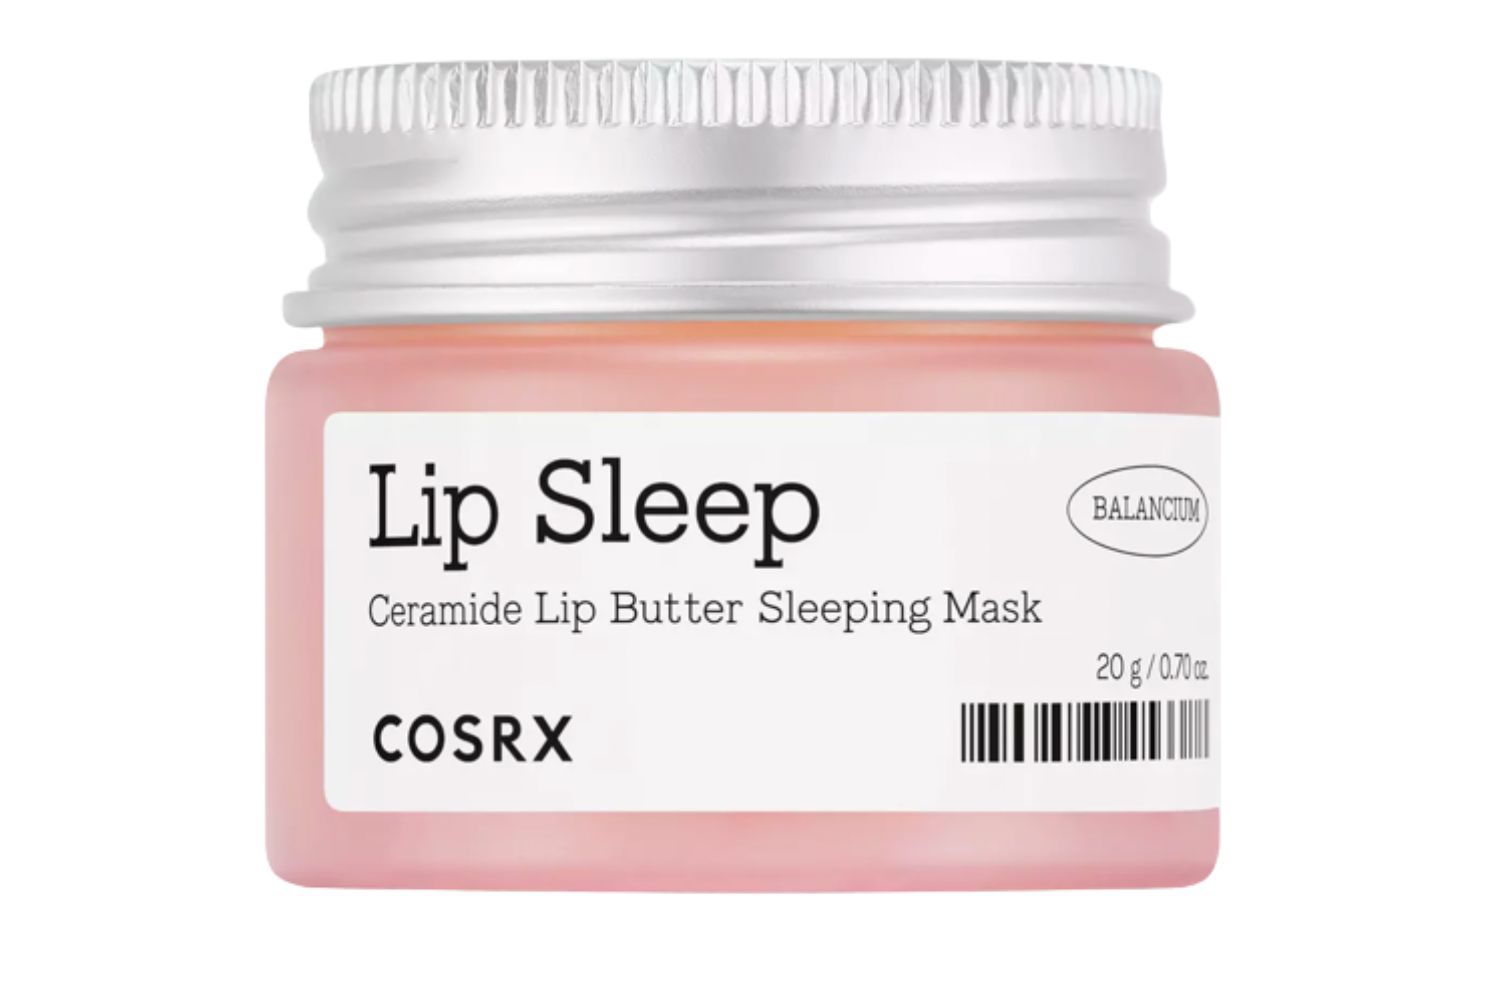 Cosrx Lip Sleep Sleep Ceramide Lip Butter Máscara de dormir